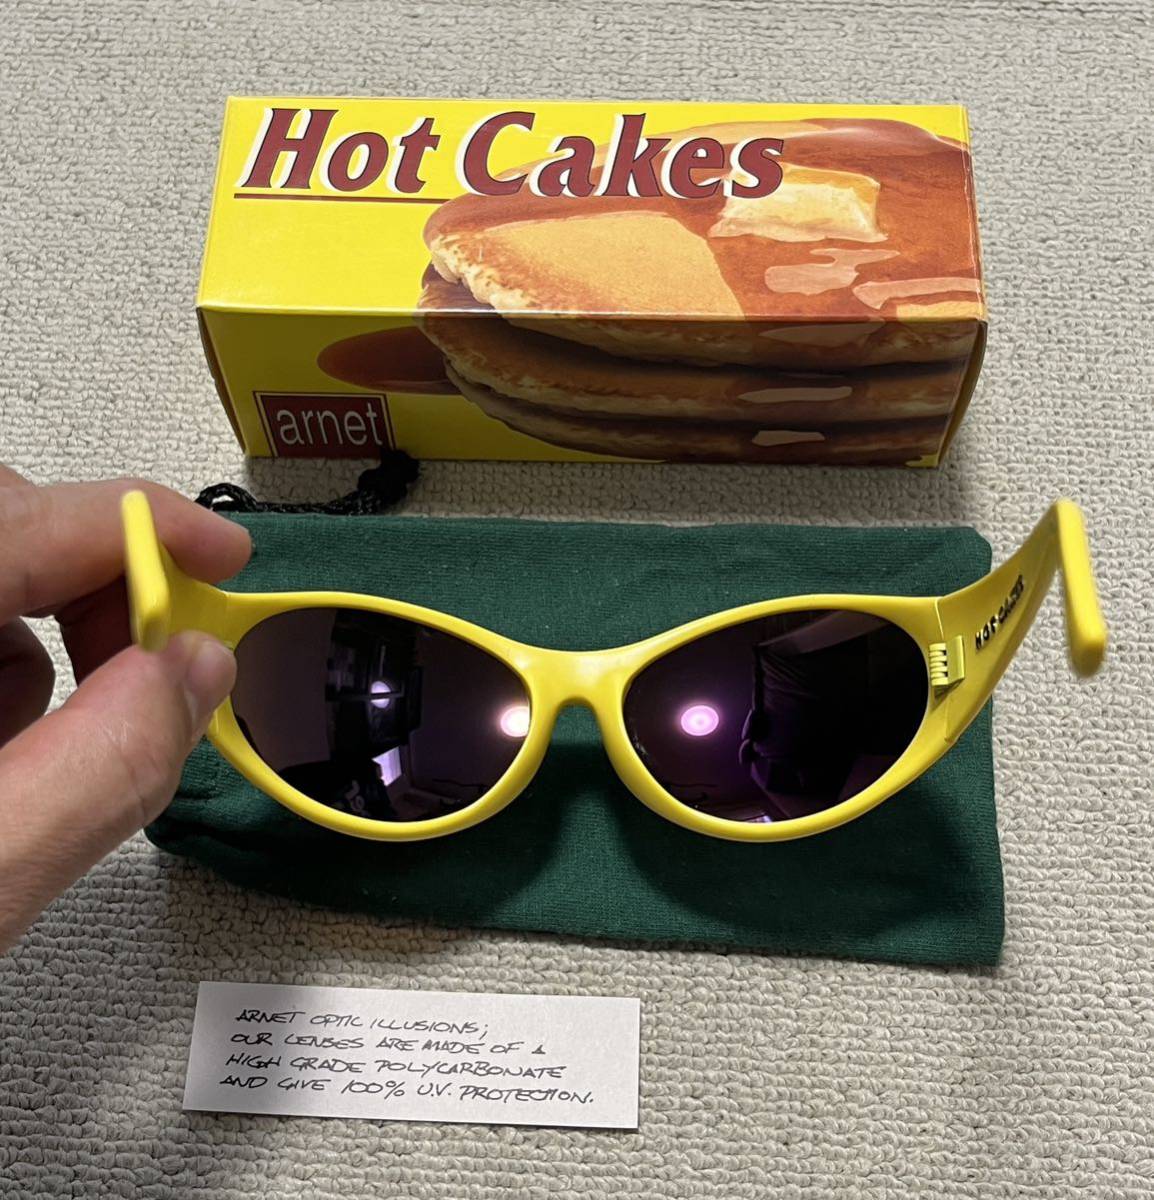  Arnette HOTCAKES солнцезащитные очки arnet Be s чай boys Vintage Италия производства hot кекс 